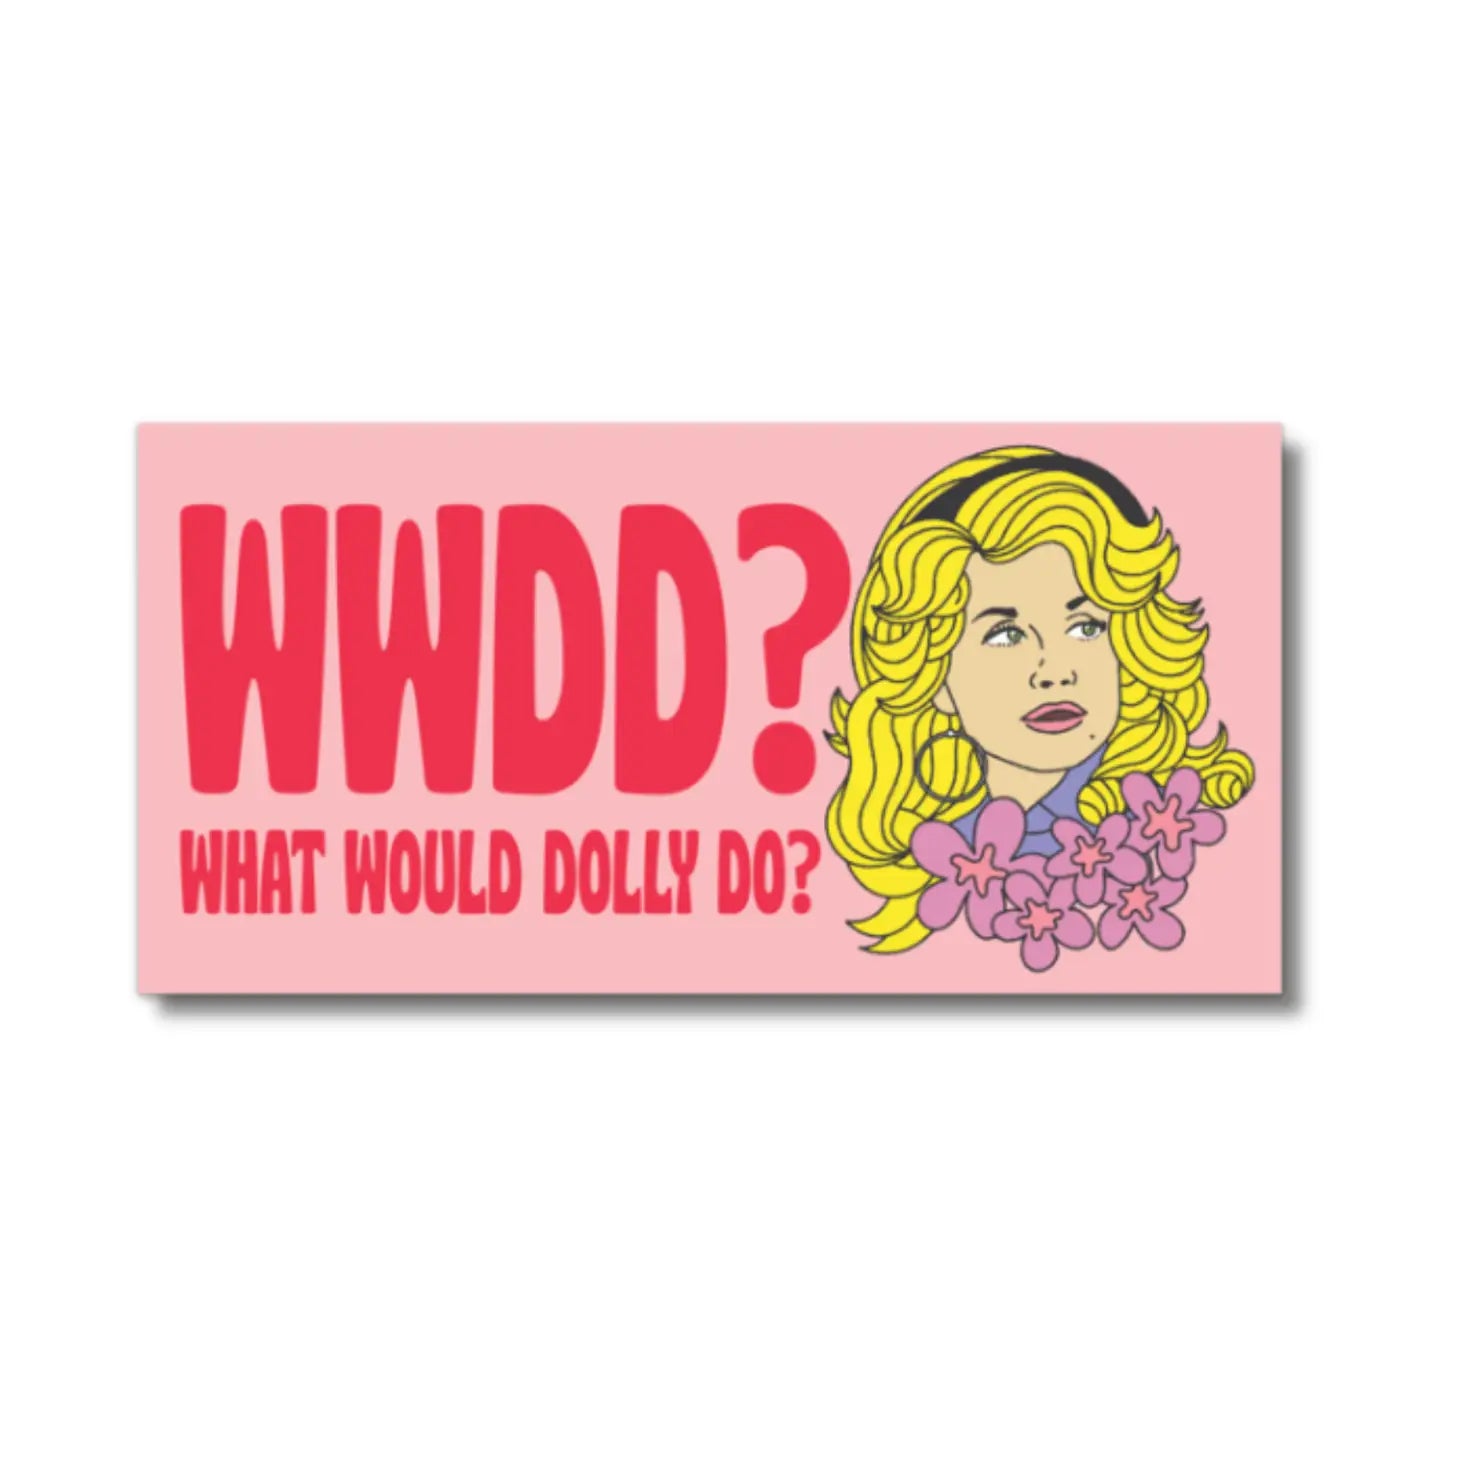 WWDD? What Would Dolly Do? Bumper Sticker